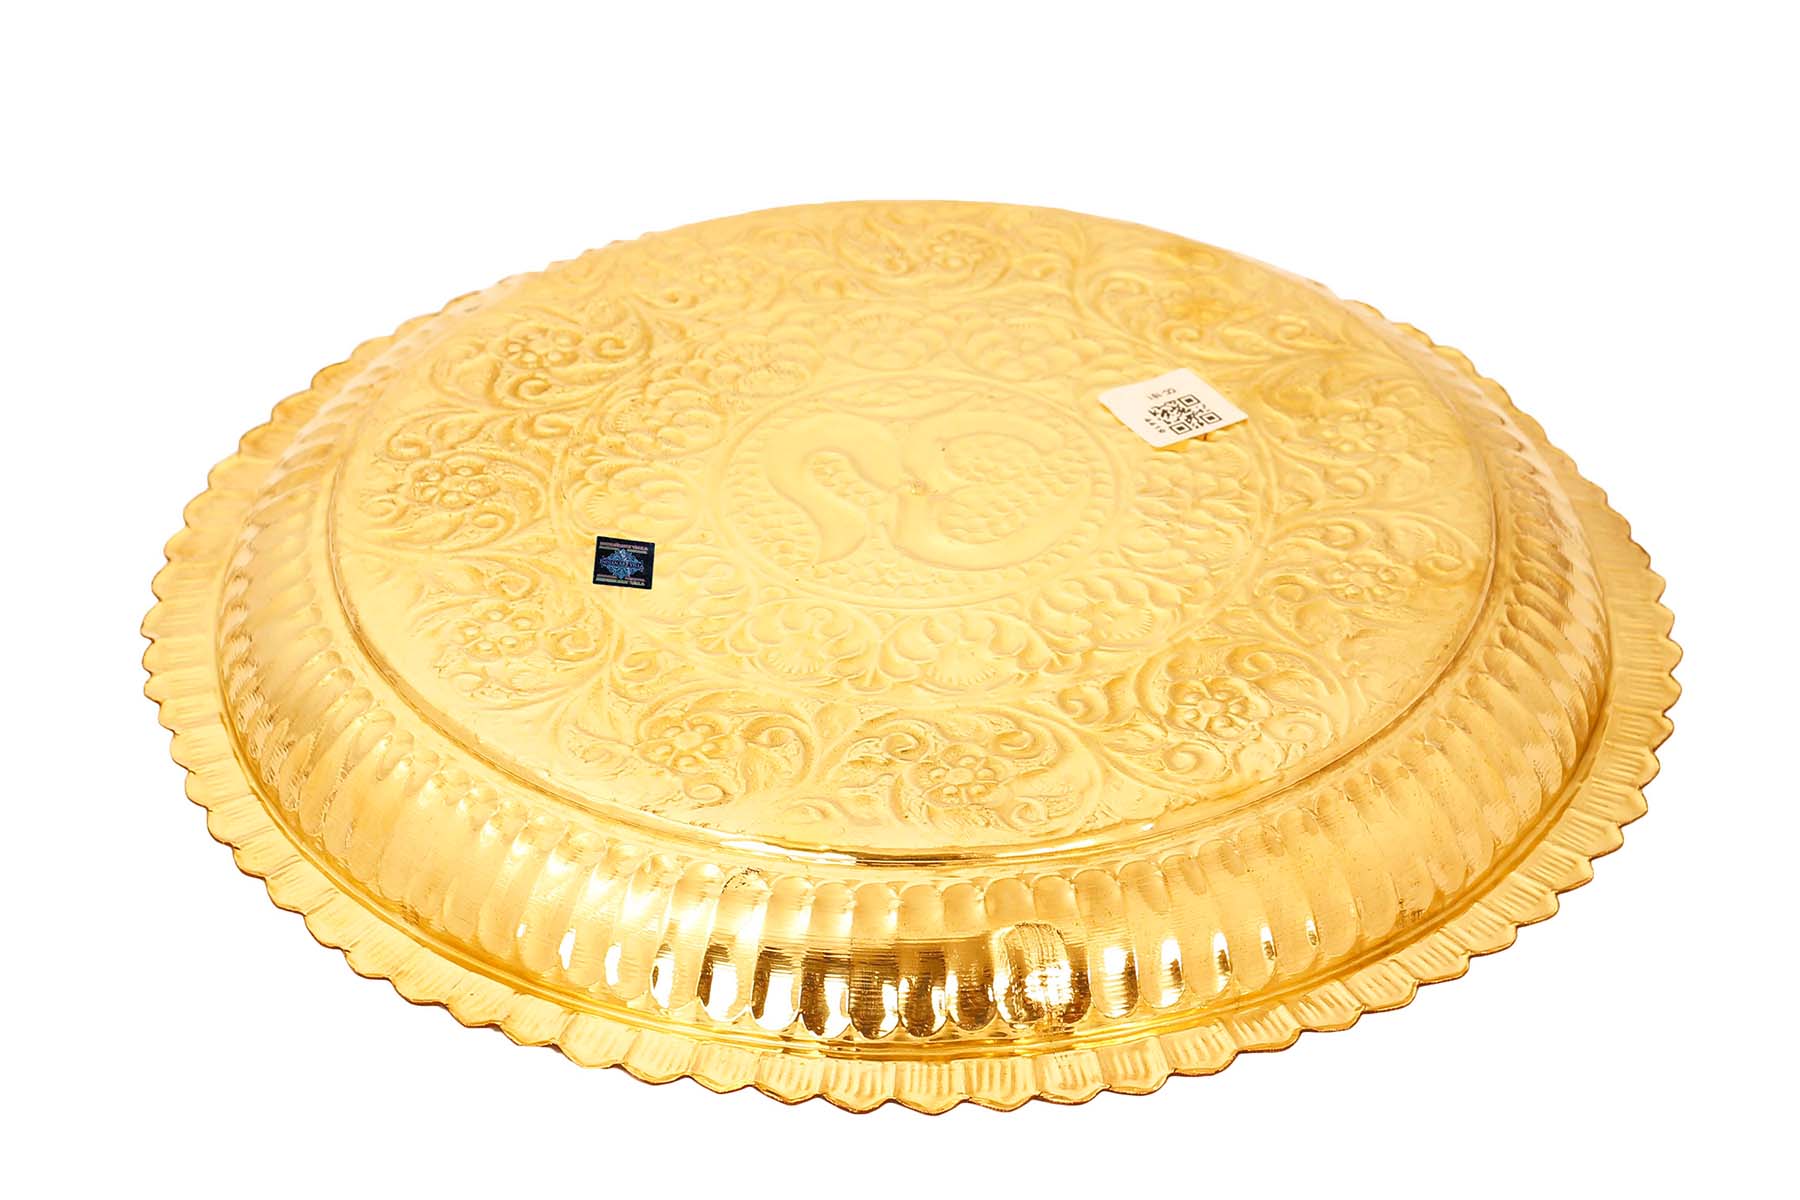 IndianArtVilla Brass Plate 13 Inch Diameter Dinner Plate Price in India -  Buy IndianArtVilla Brass Plate 13 Inch Diameter Dinner Plate online at